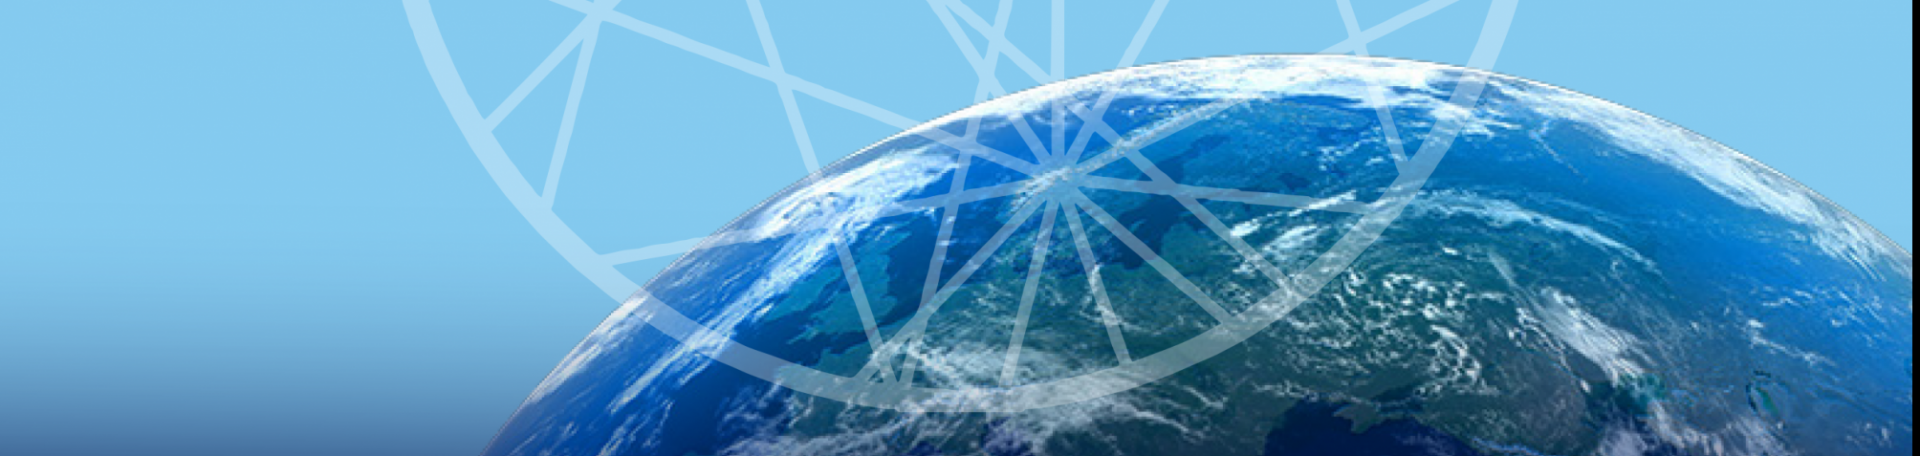 AC4 Logo over world globe